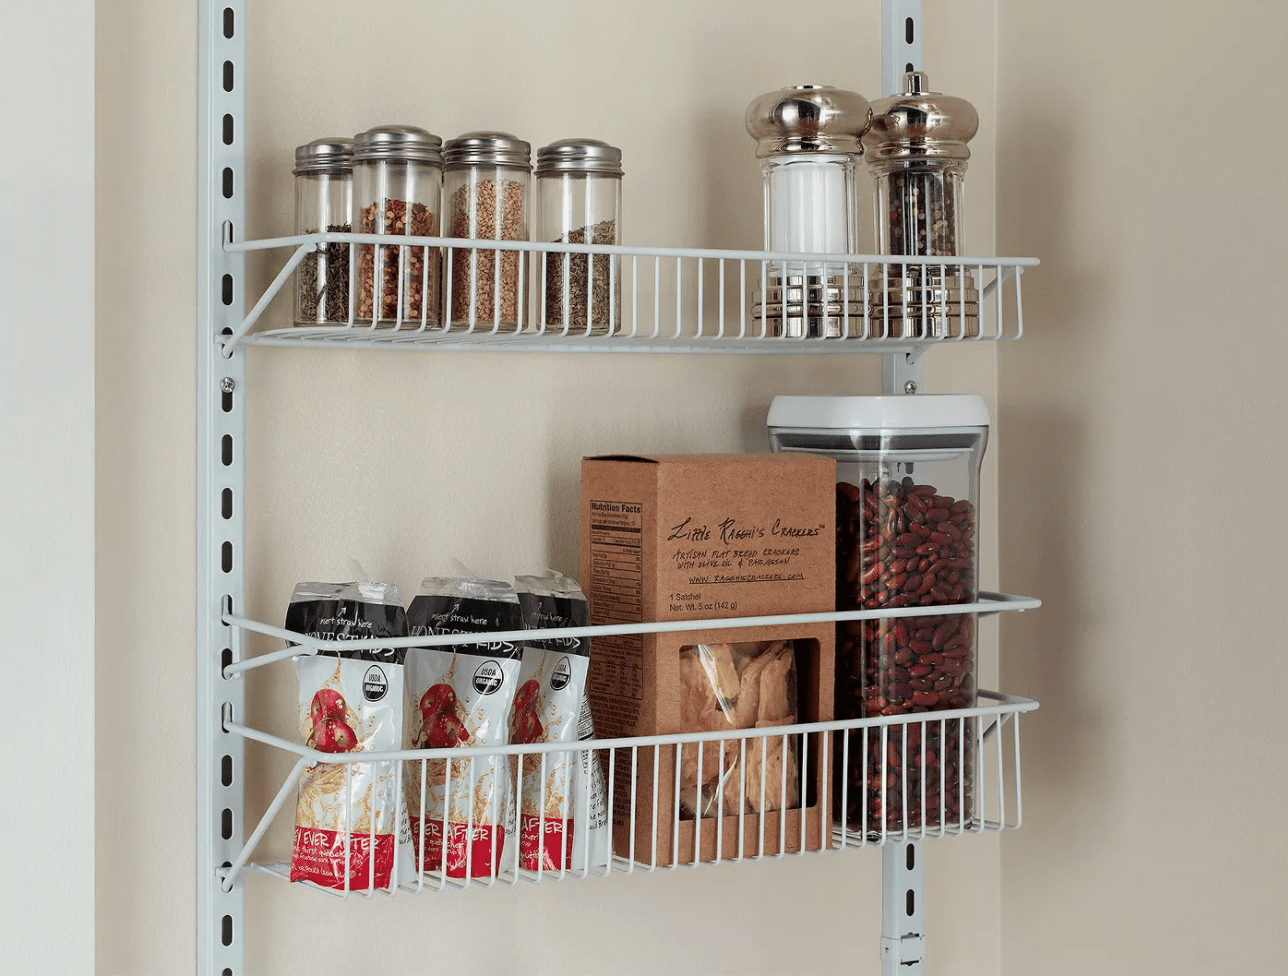 Details about   Over The Door Pantry Organizer Rack Storage Kitchen Cabinet Holder Sheet Board 